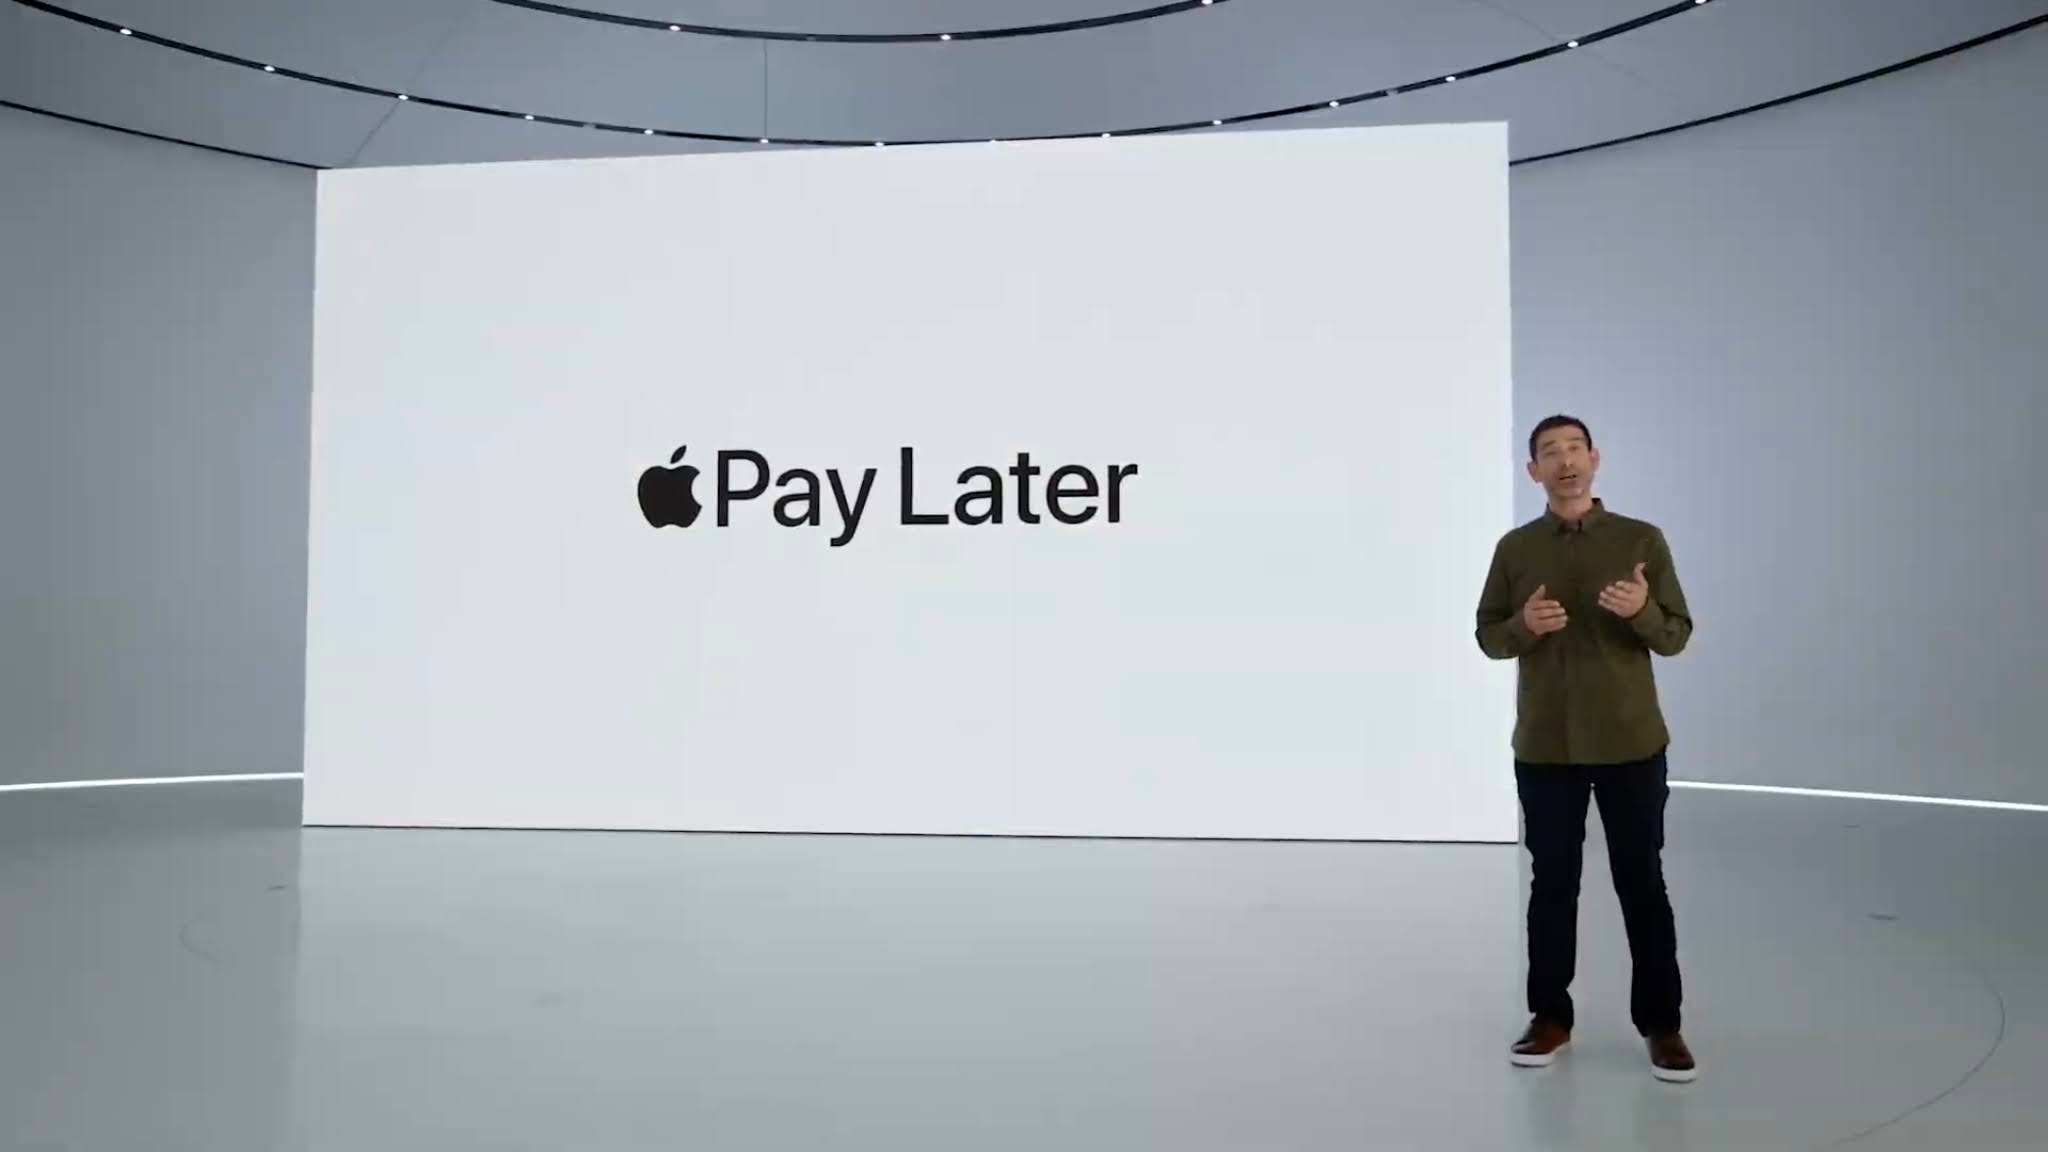 alt="Apple Pay Later"